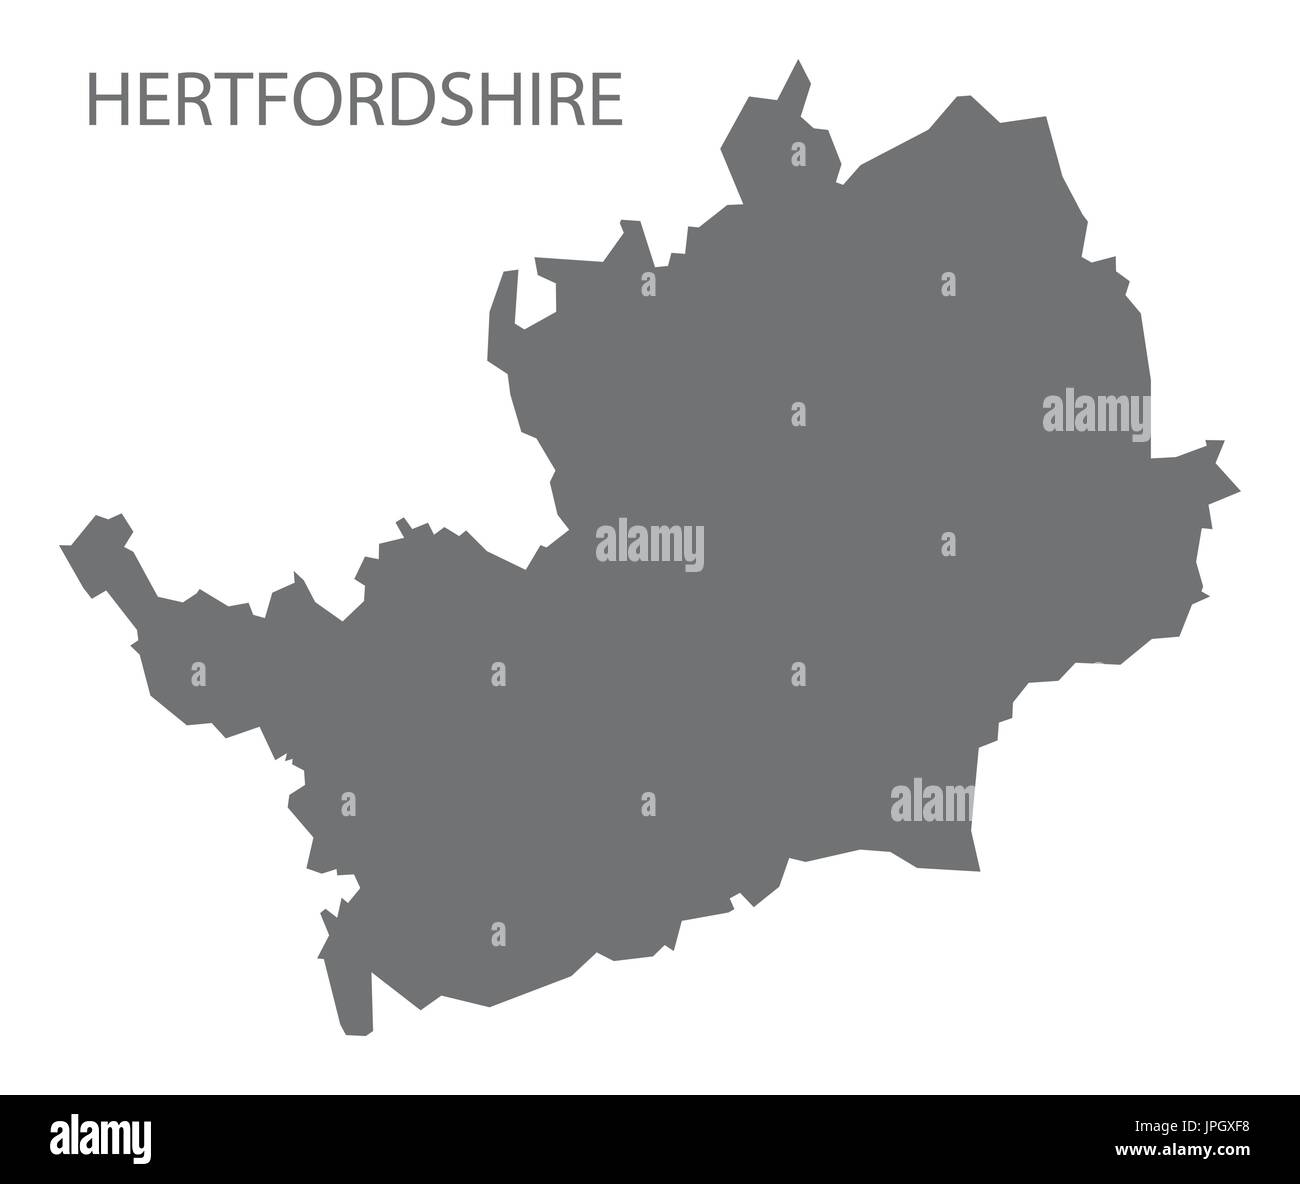 Hertfordshire county map England UK grey illustration silhouette shape Stock Vector